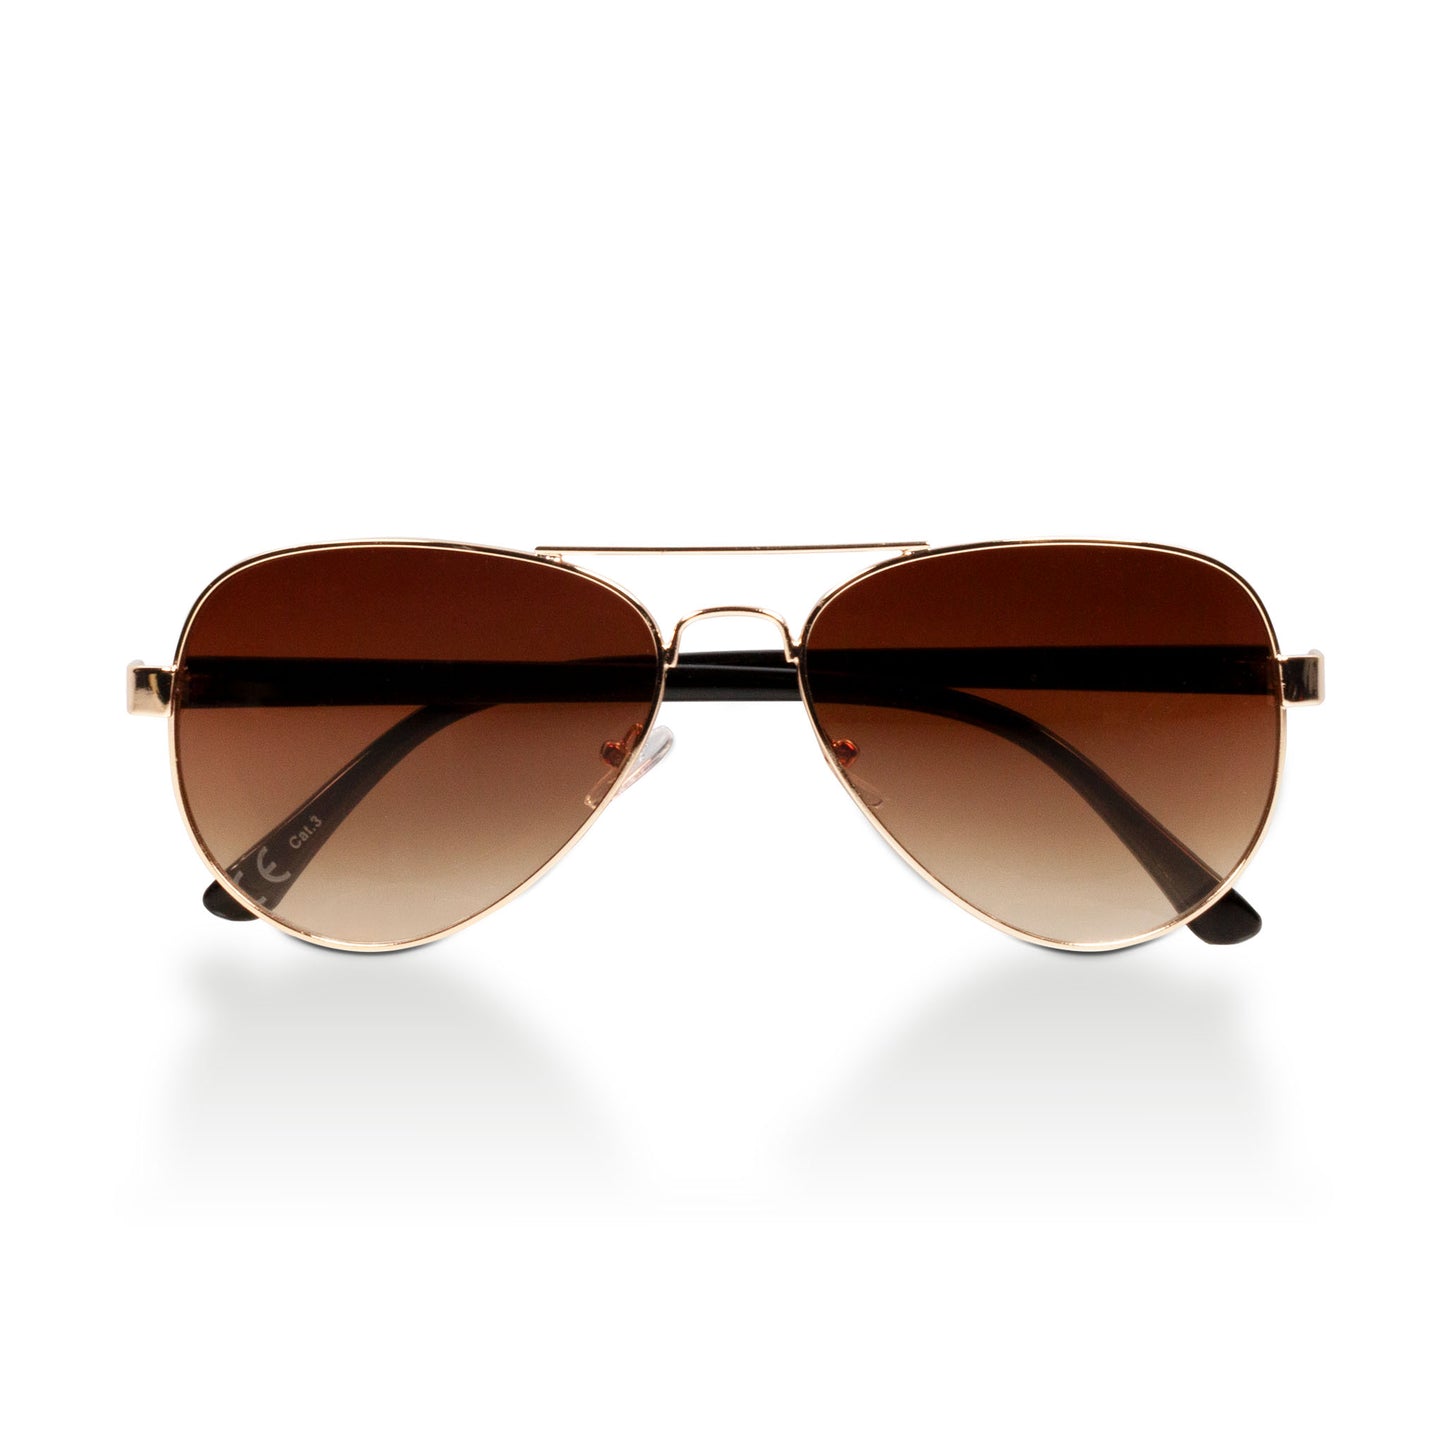 MagGlasses "pilot" sunglasses